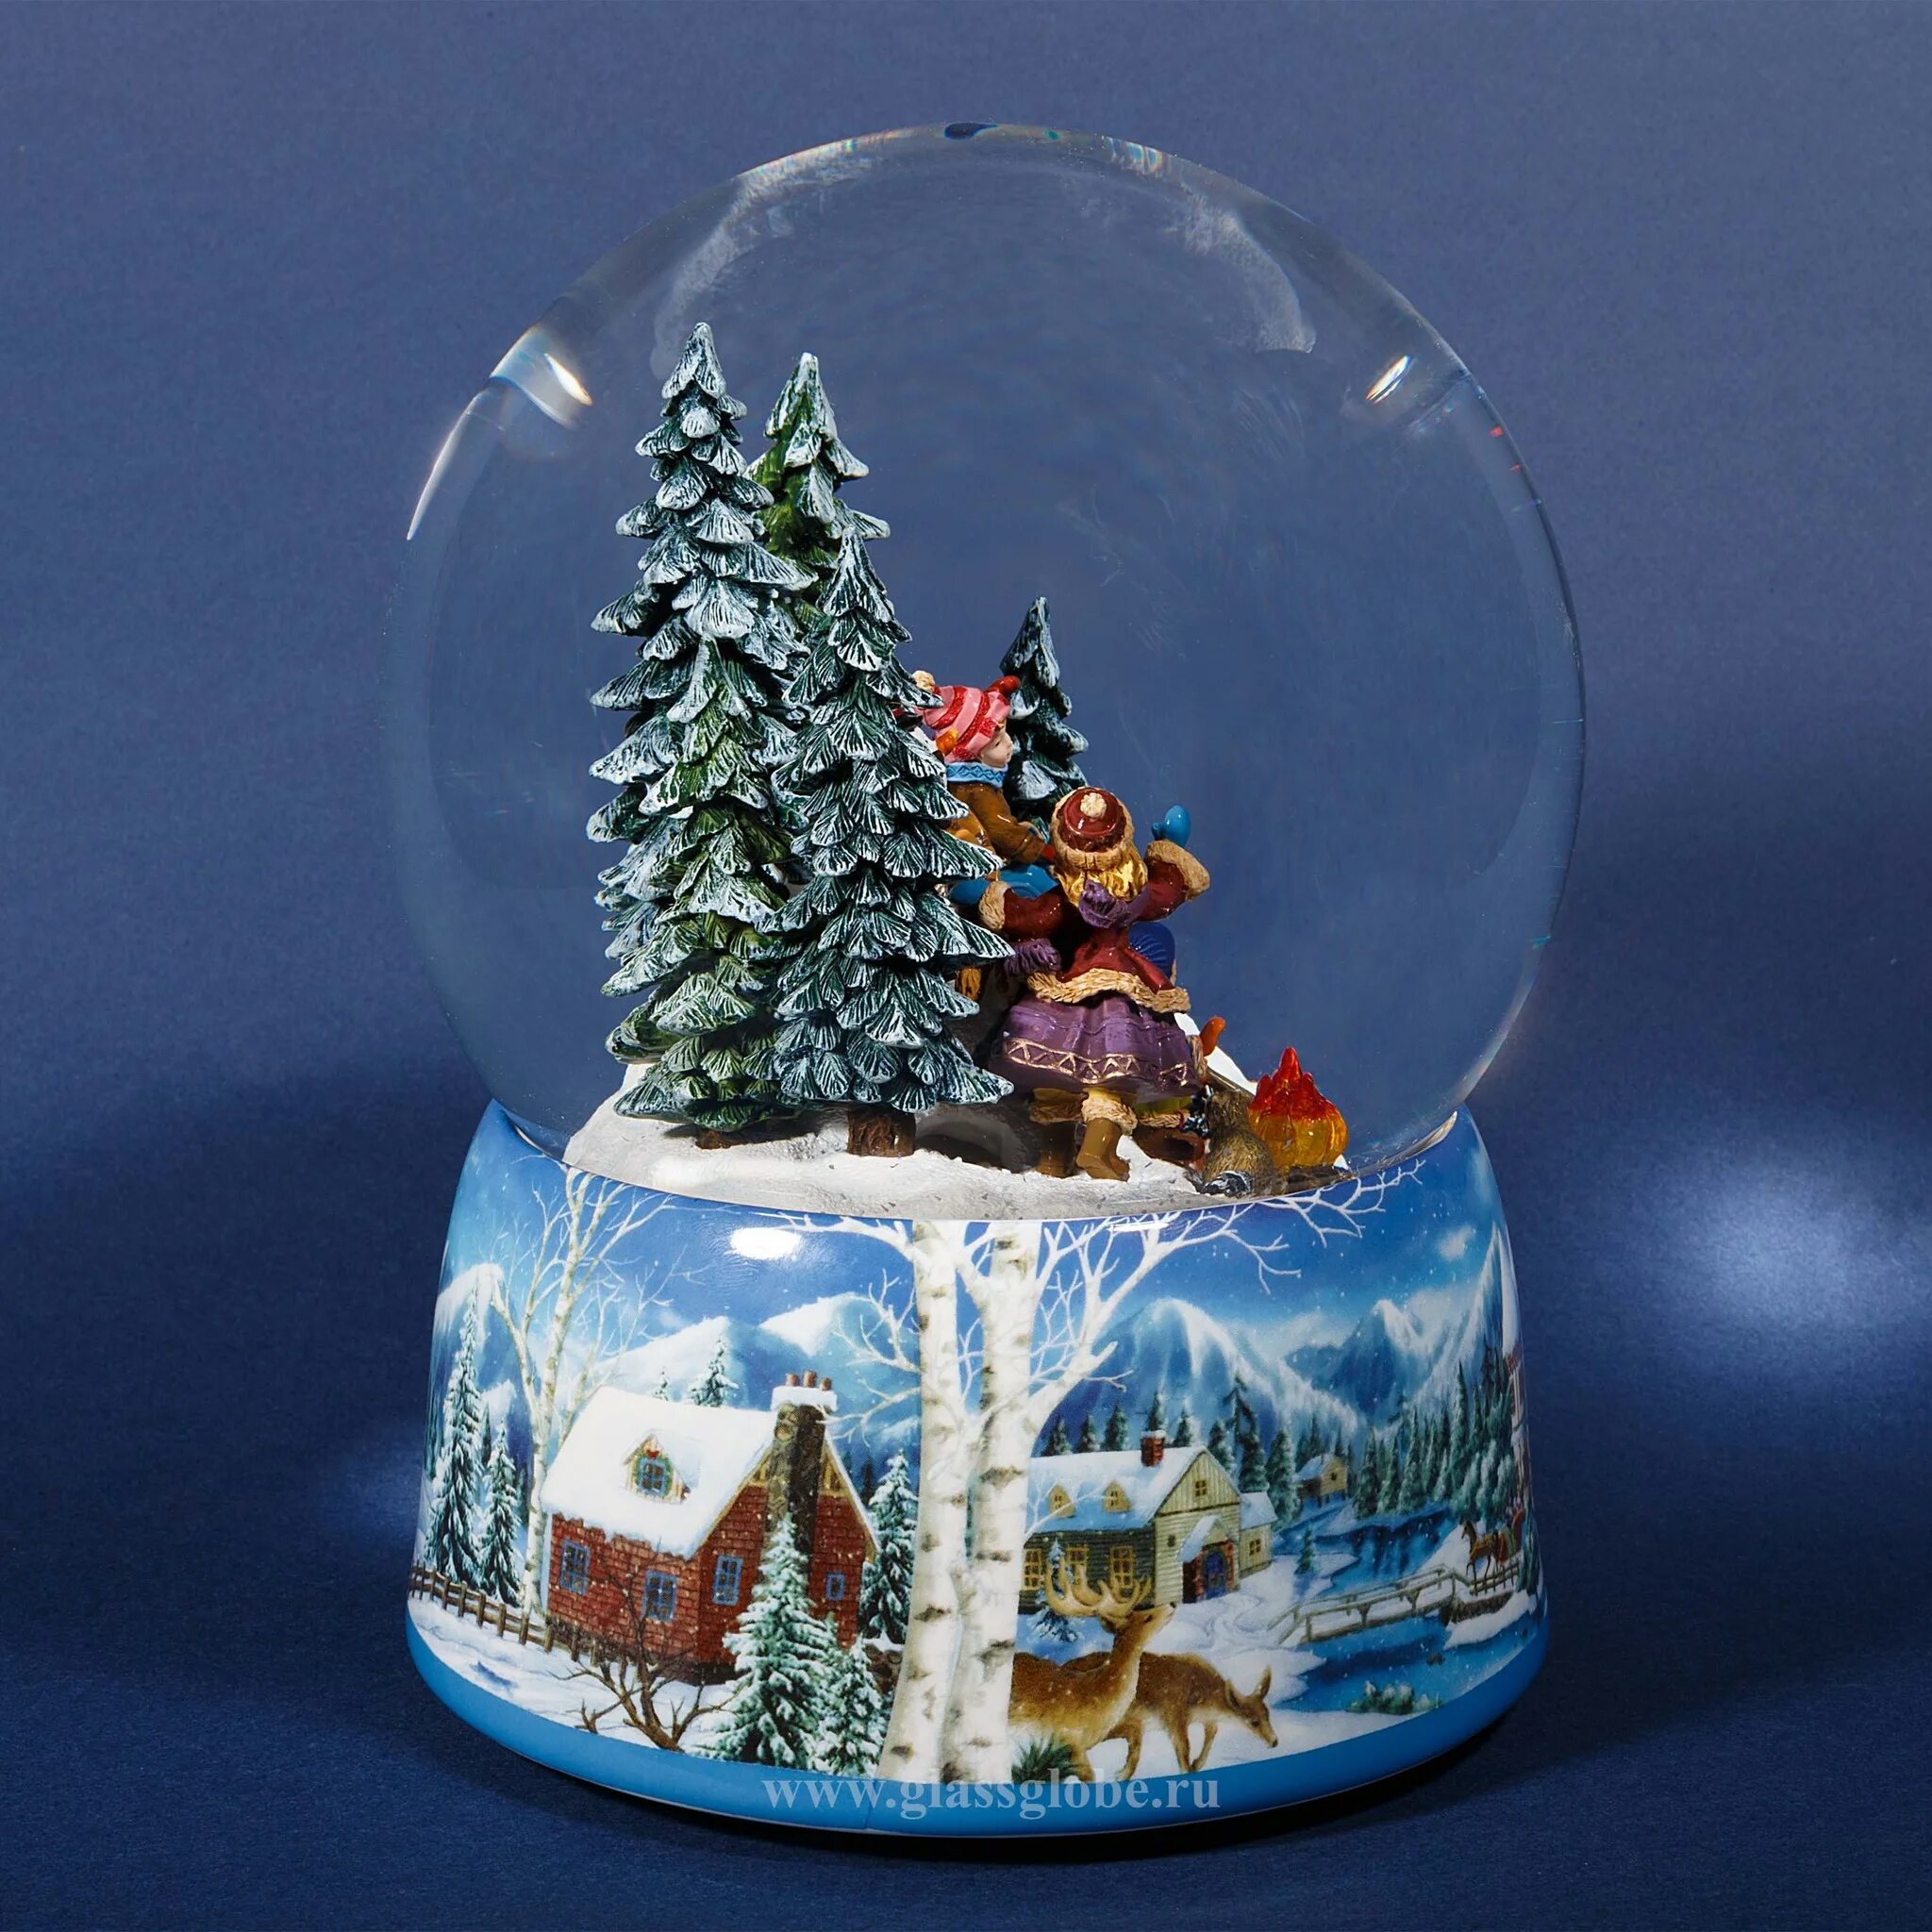 Снег снежном шаре. Снежный шар Toys 277c-995. Стеклянный шар со снегом. Новогодний стеклянный шар. Новогодние стеклянные шары со снегом.